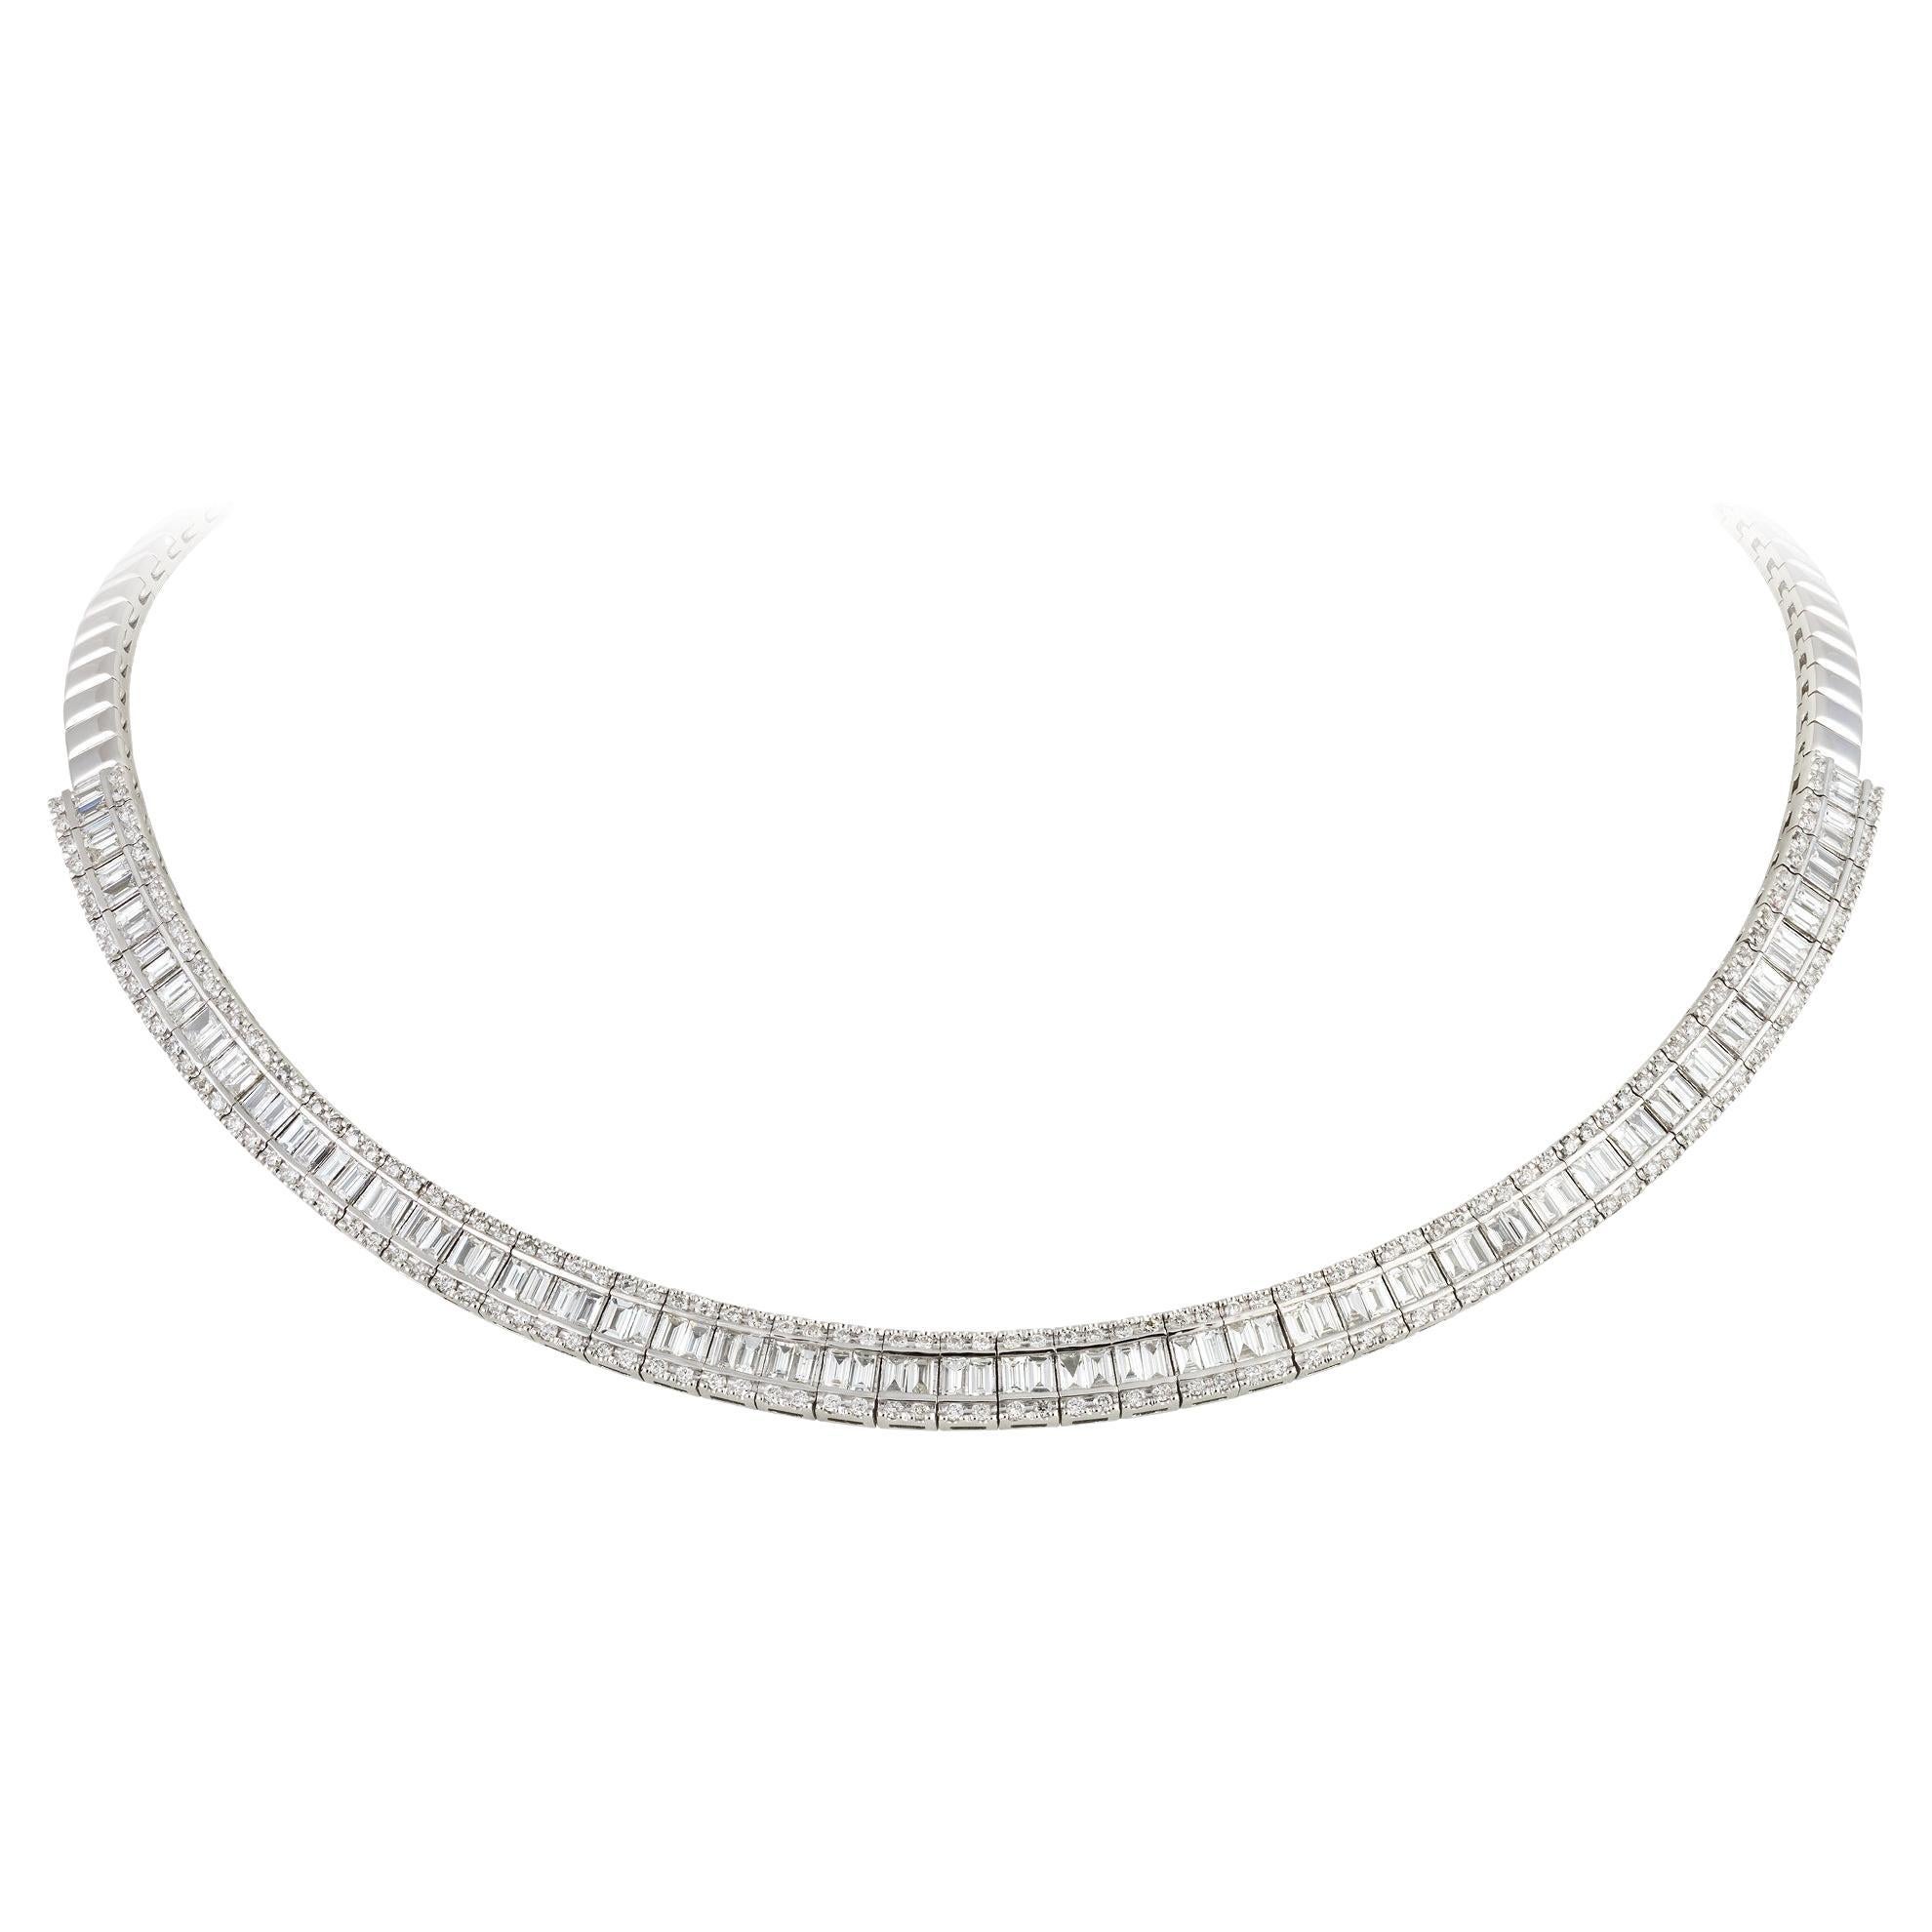 Unique Choker White Gold 18K Necklace Diamond for Her